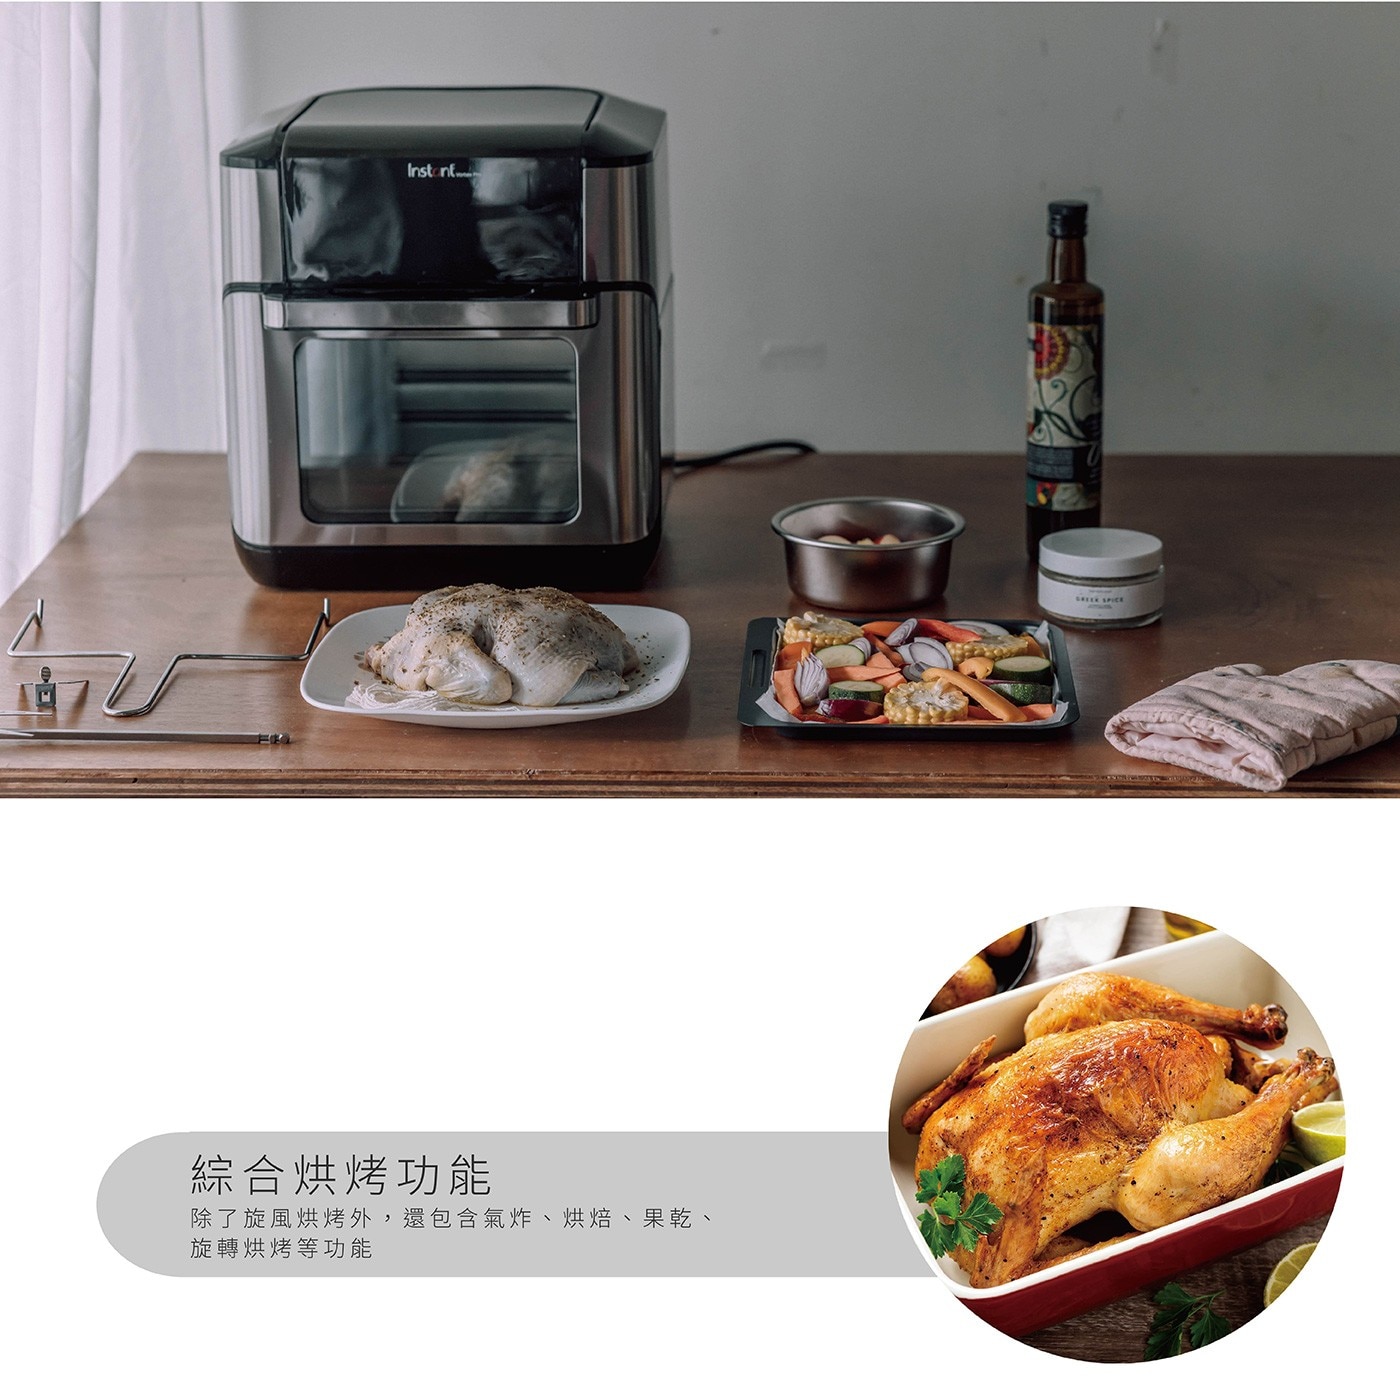 Instant Vortex Pro 9.5公升氣炸烤箱,綜合烘烤功能,除了旋風烘烤外還包含氣炸,烘焙,果乾,旋轉烘烤等功能